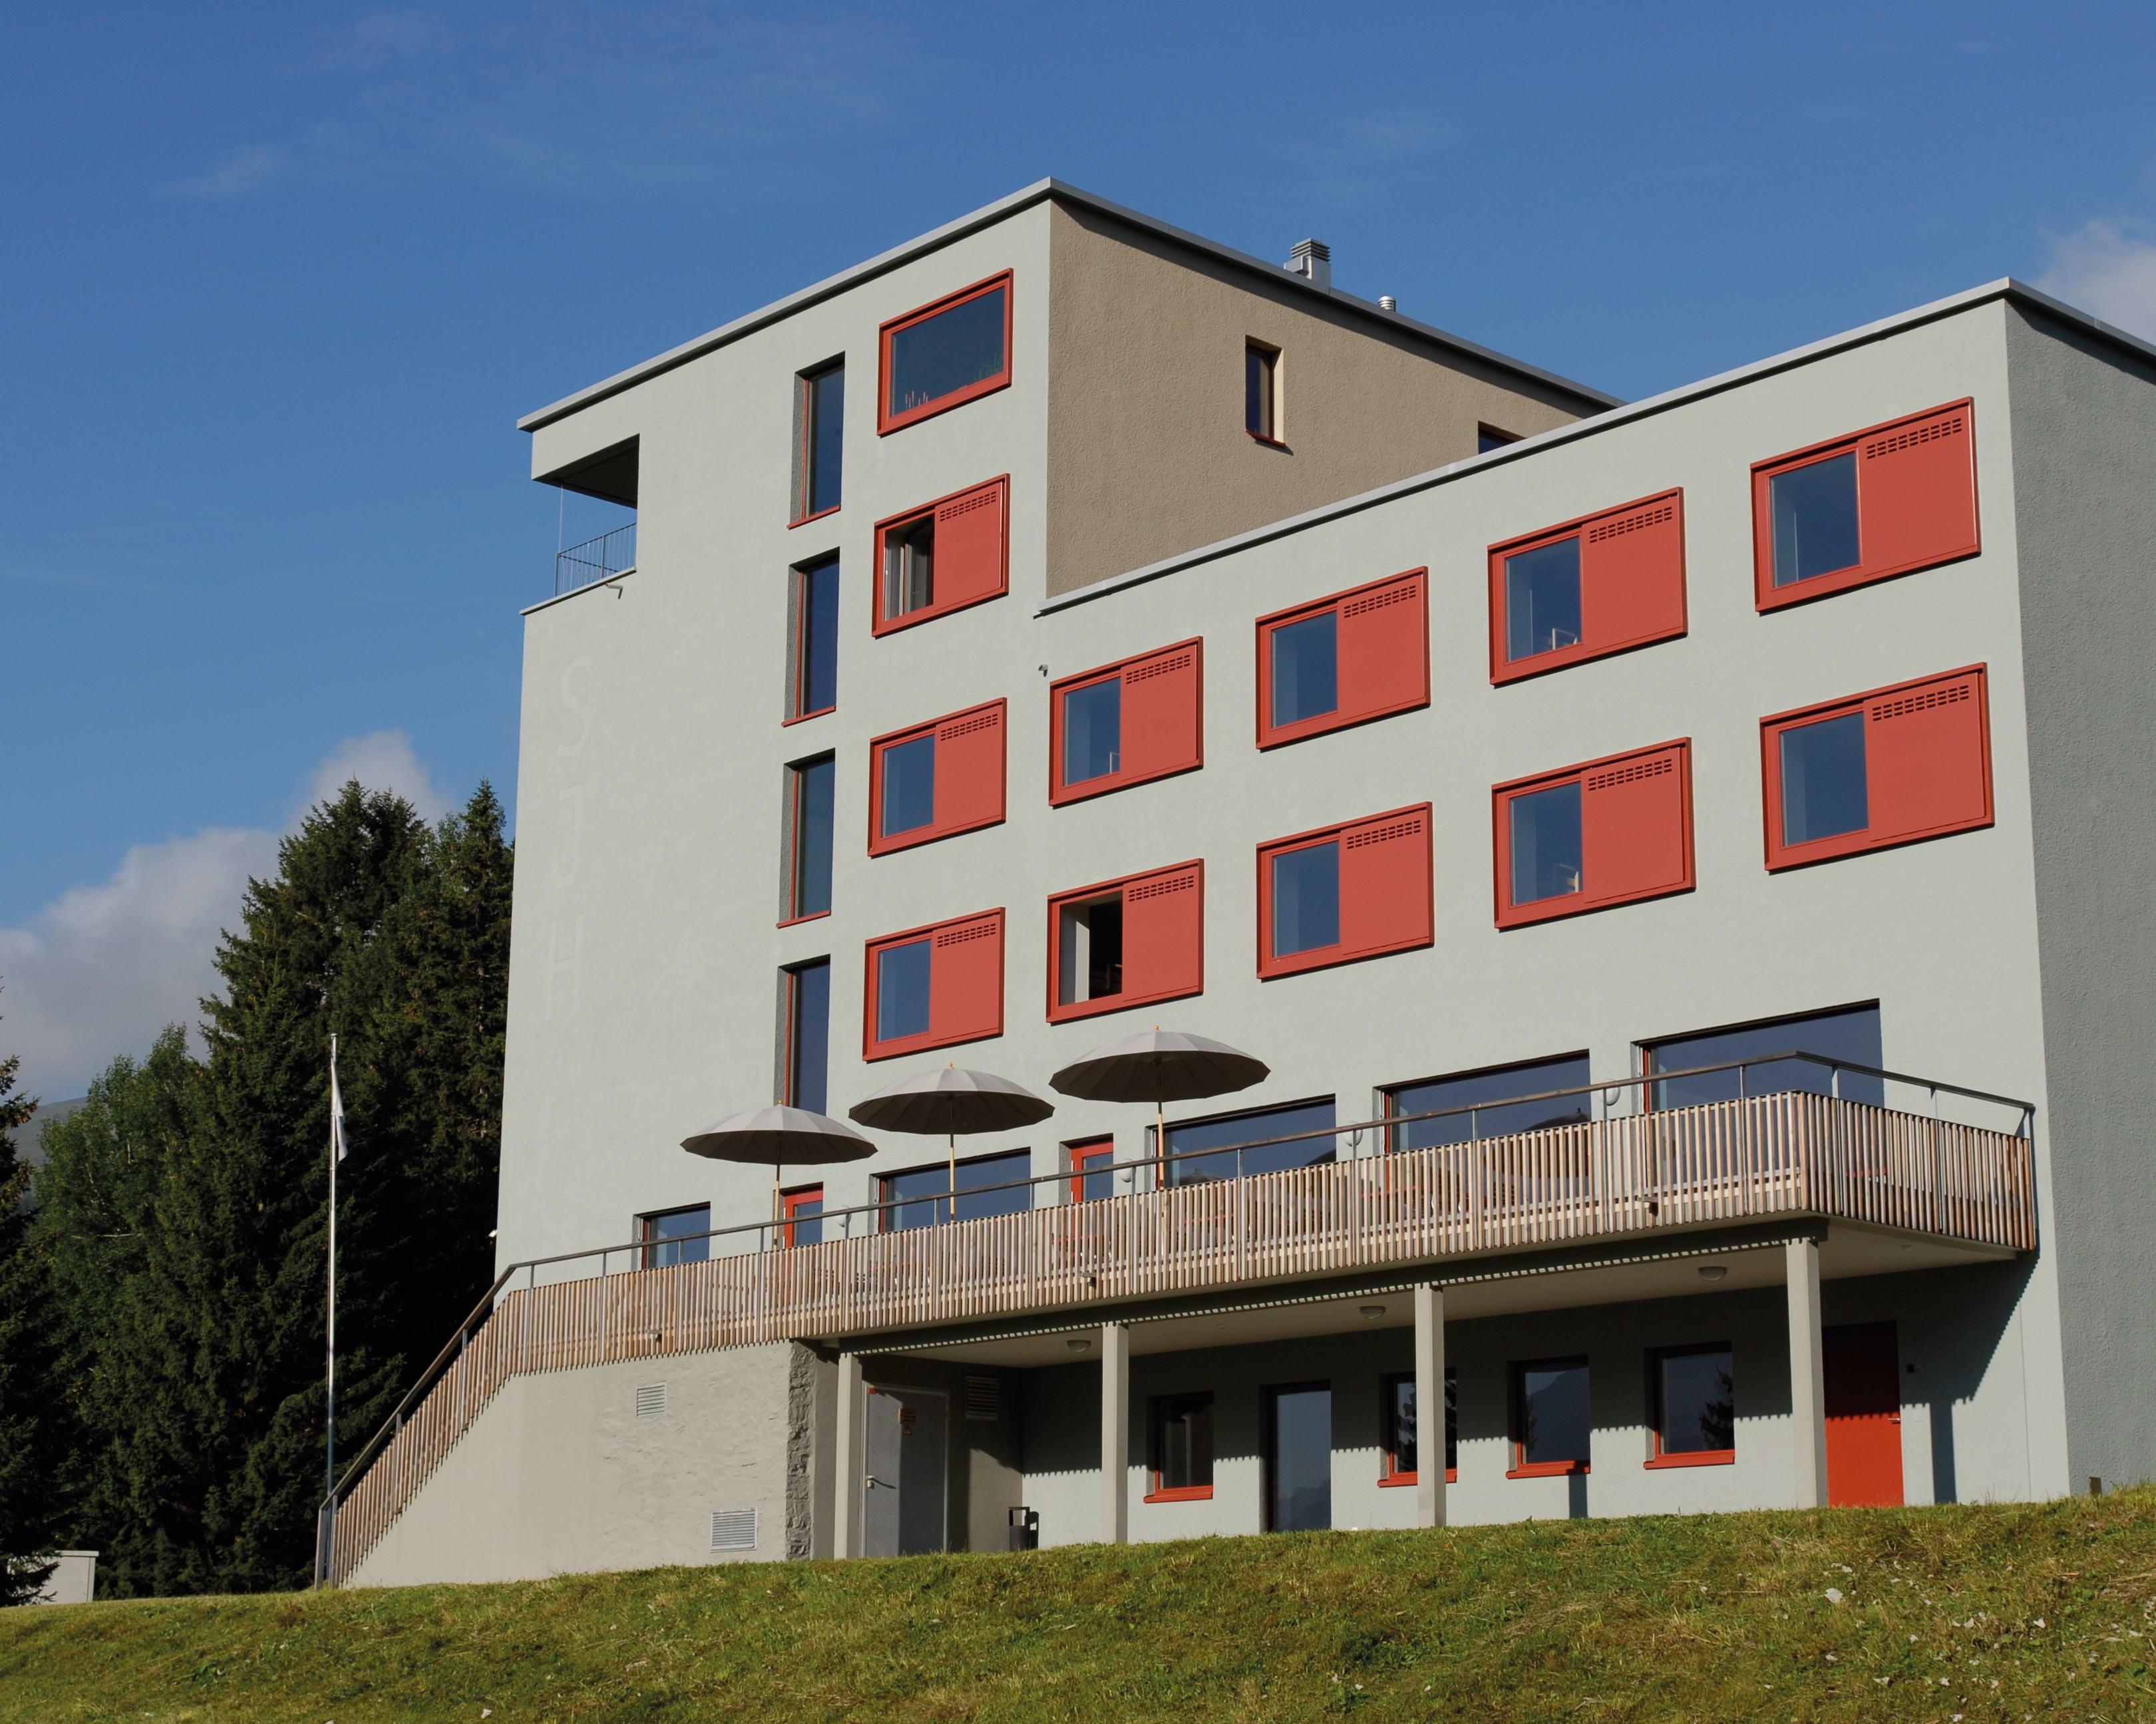 Valbella-Lenzerheide Youth Hostel